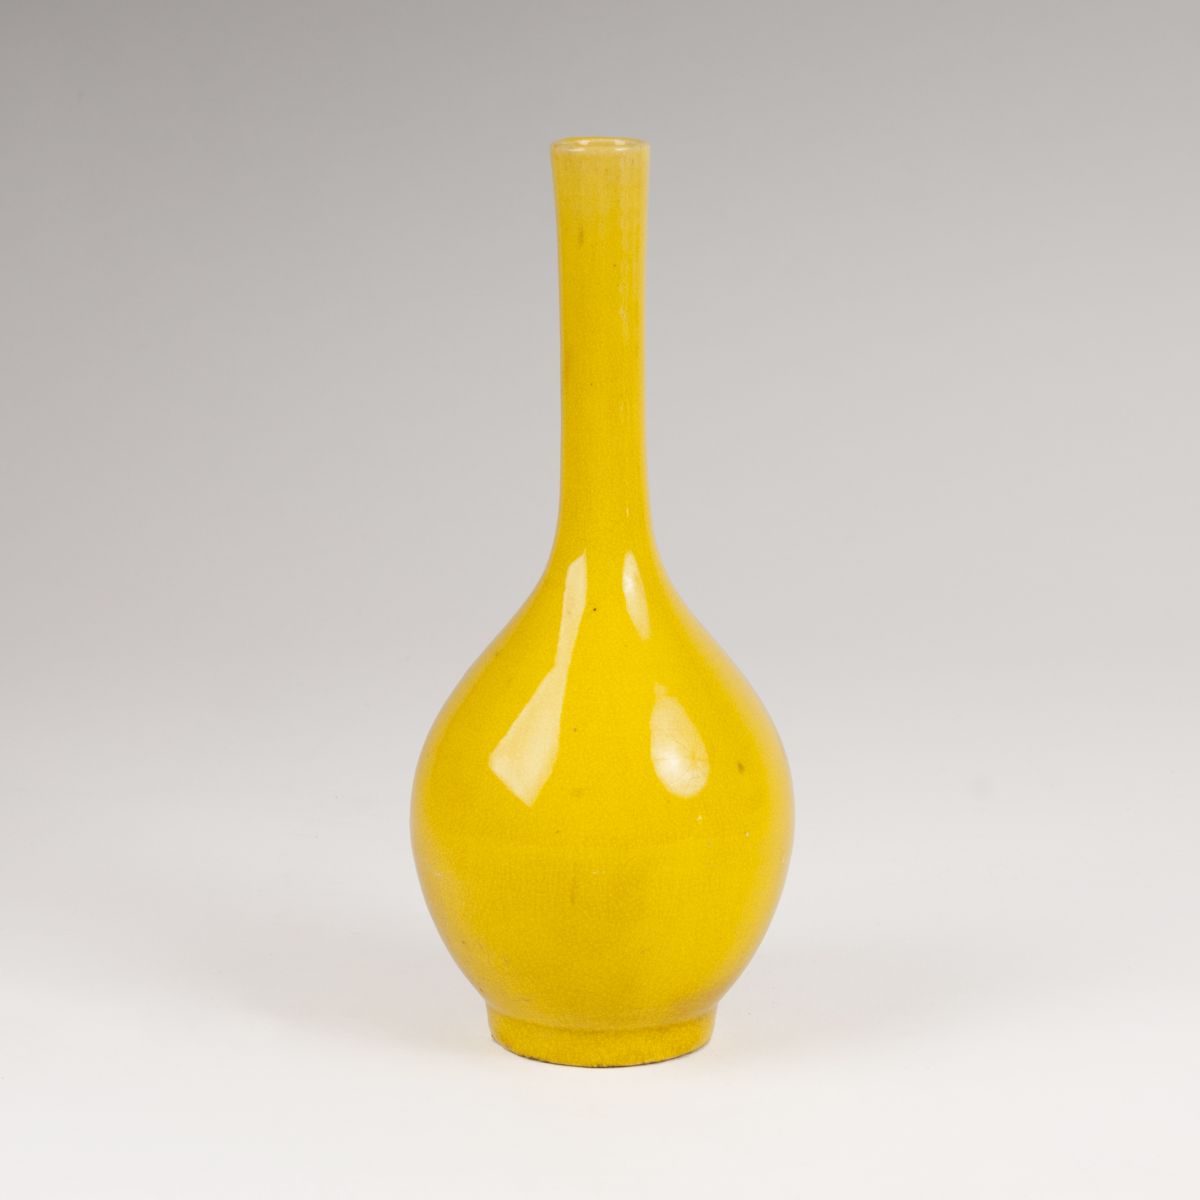 A small porcelain narrow neck vase with lemon-yellow glaze